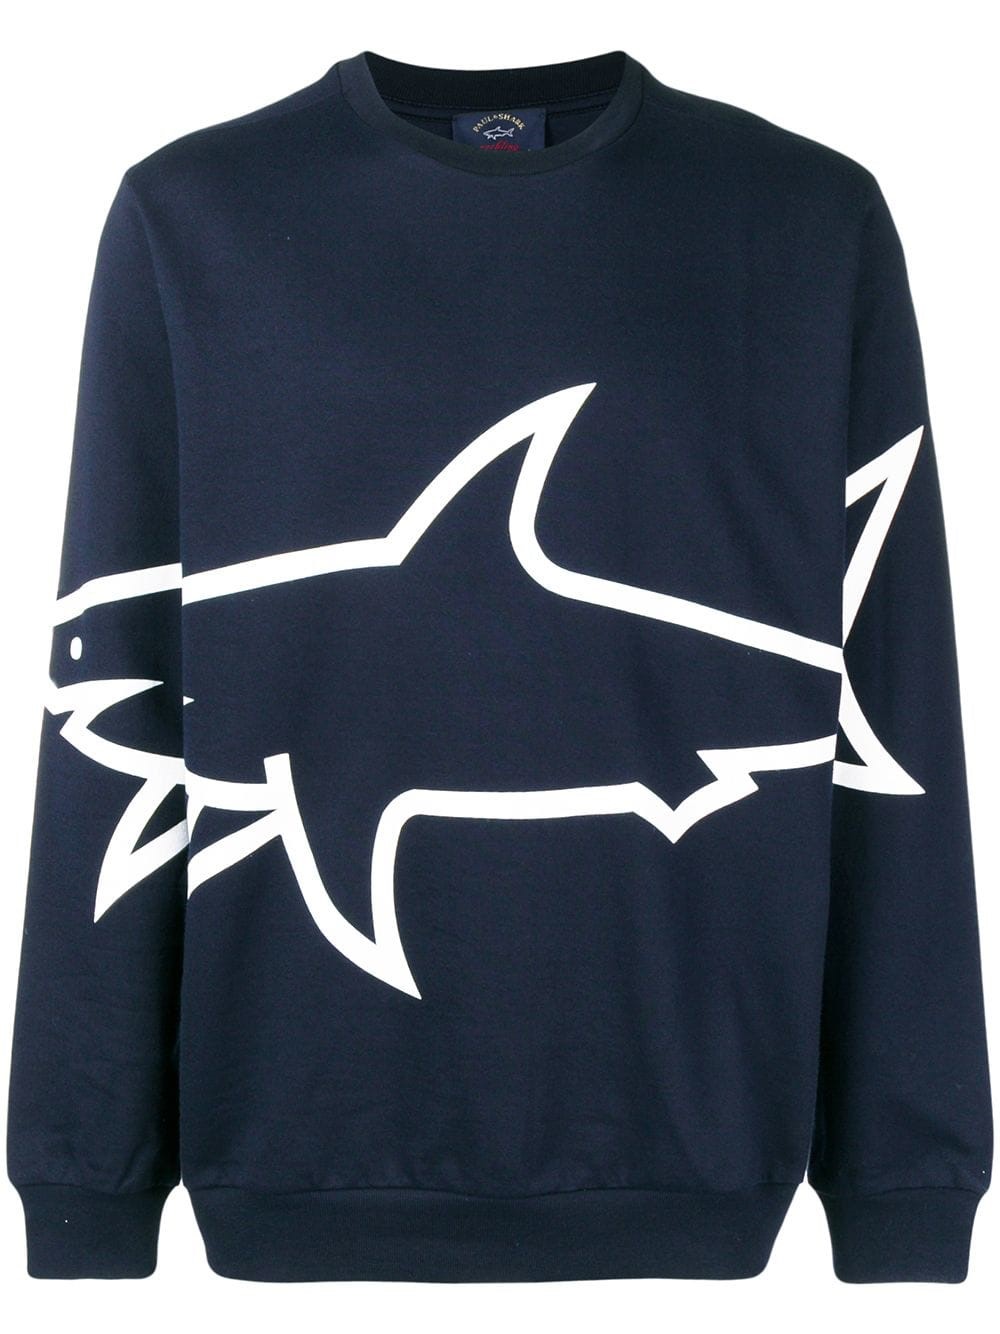 paul & shark SHARK SWEATER available on montiboutique.com - 26394